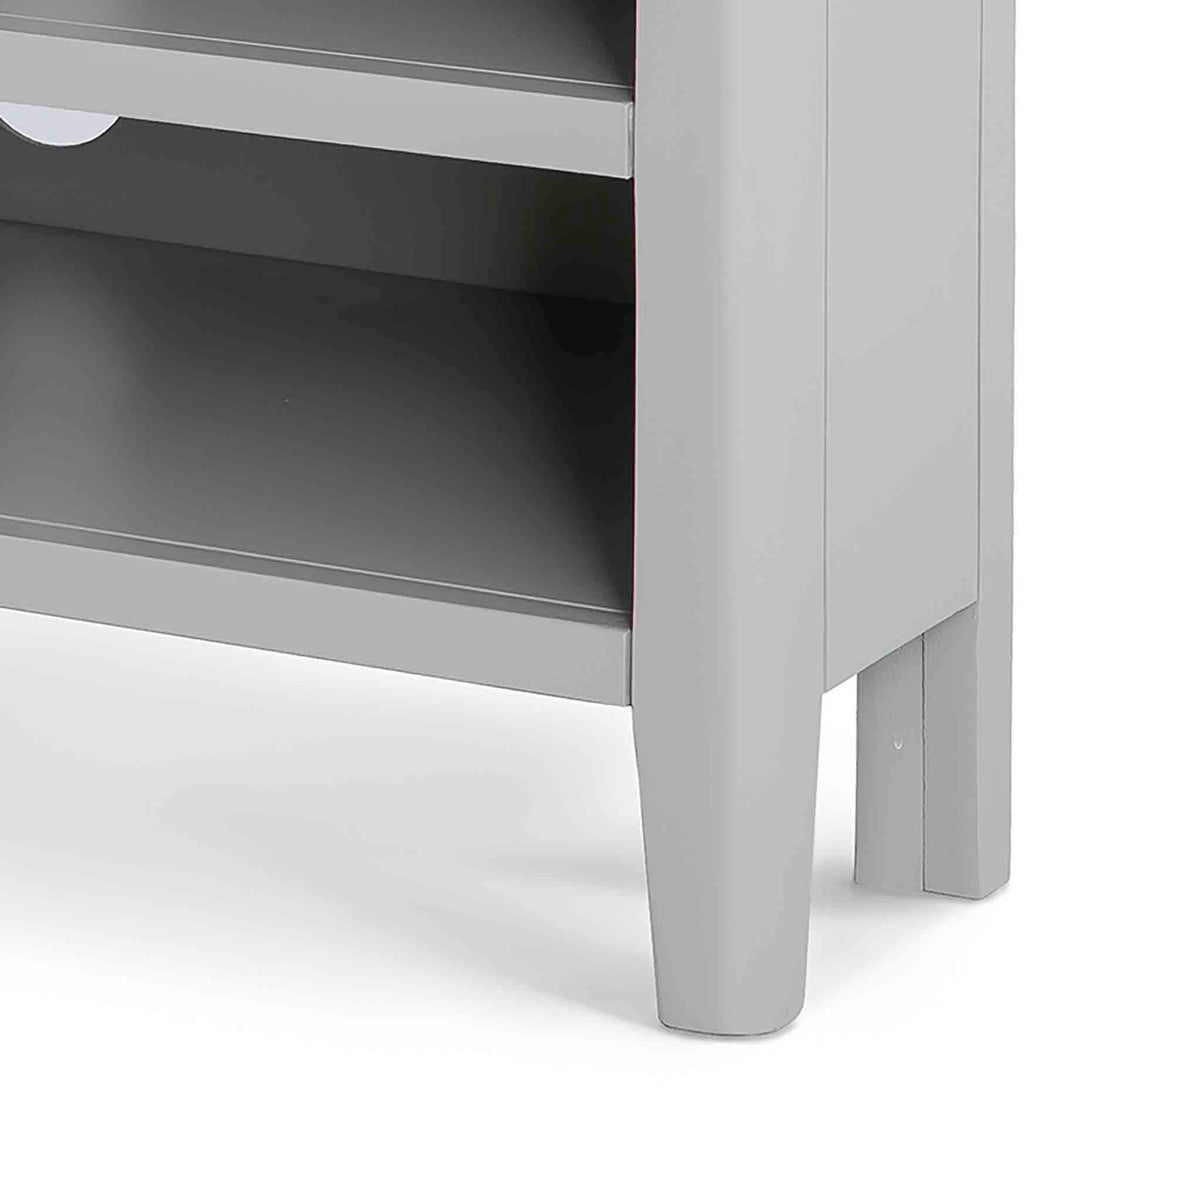 Elgin Grey corner TV stand - Close up of feet